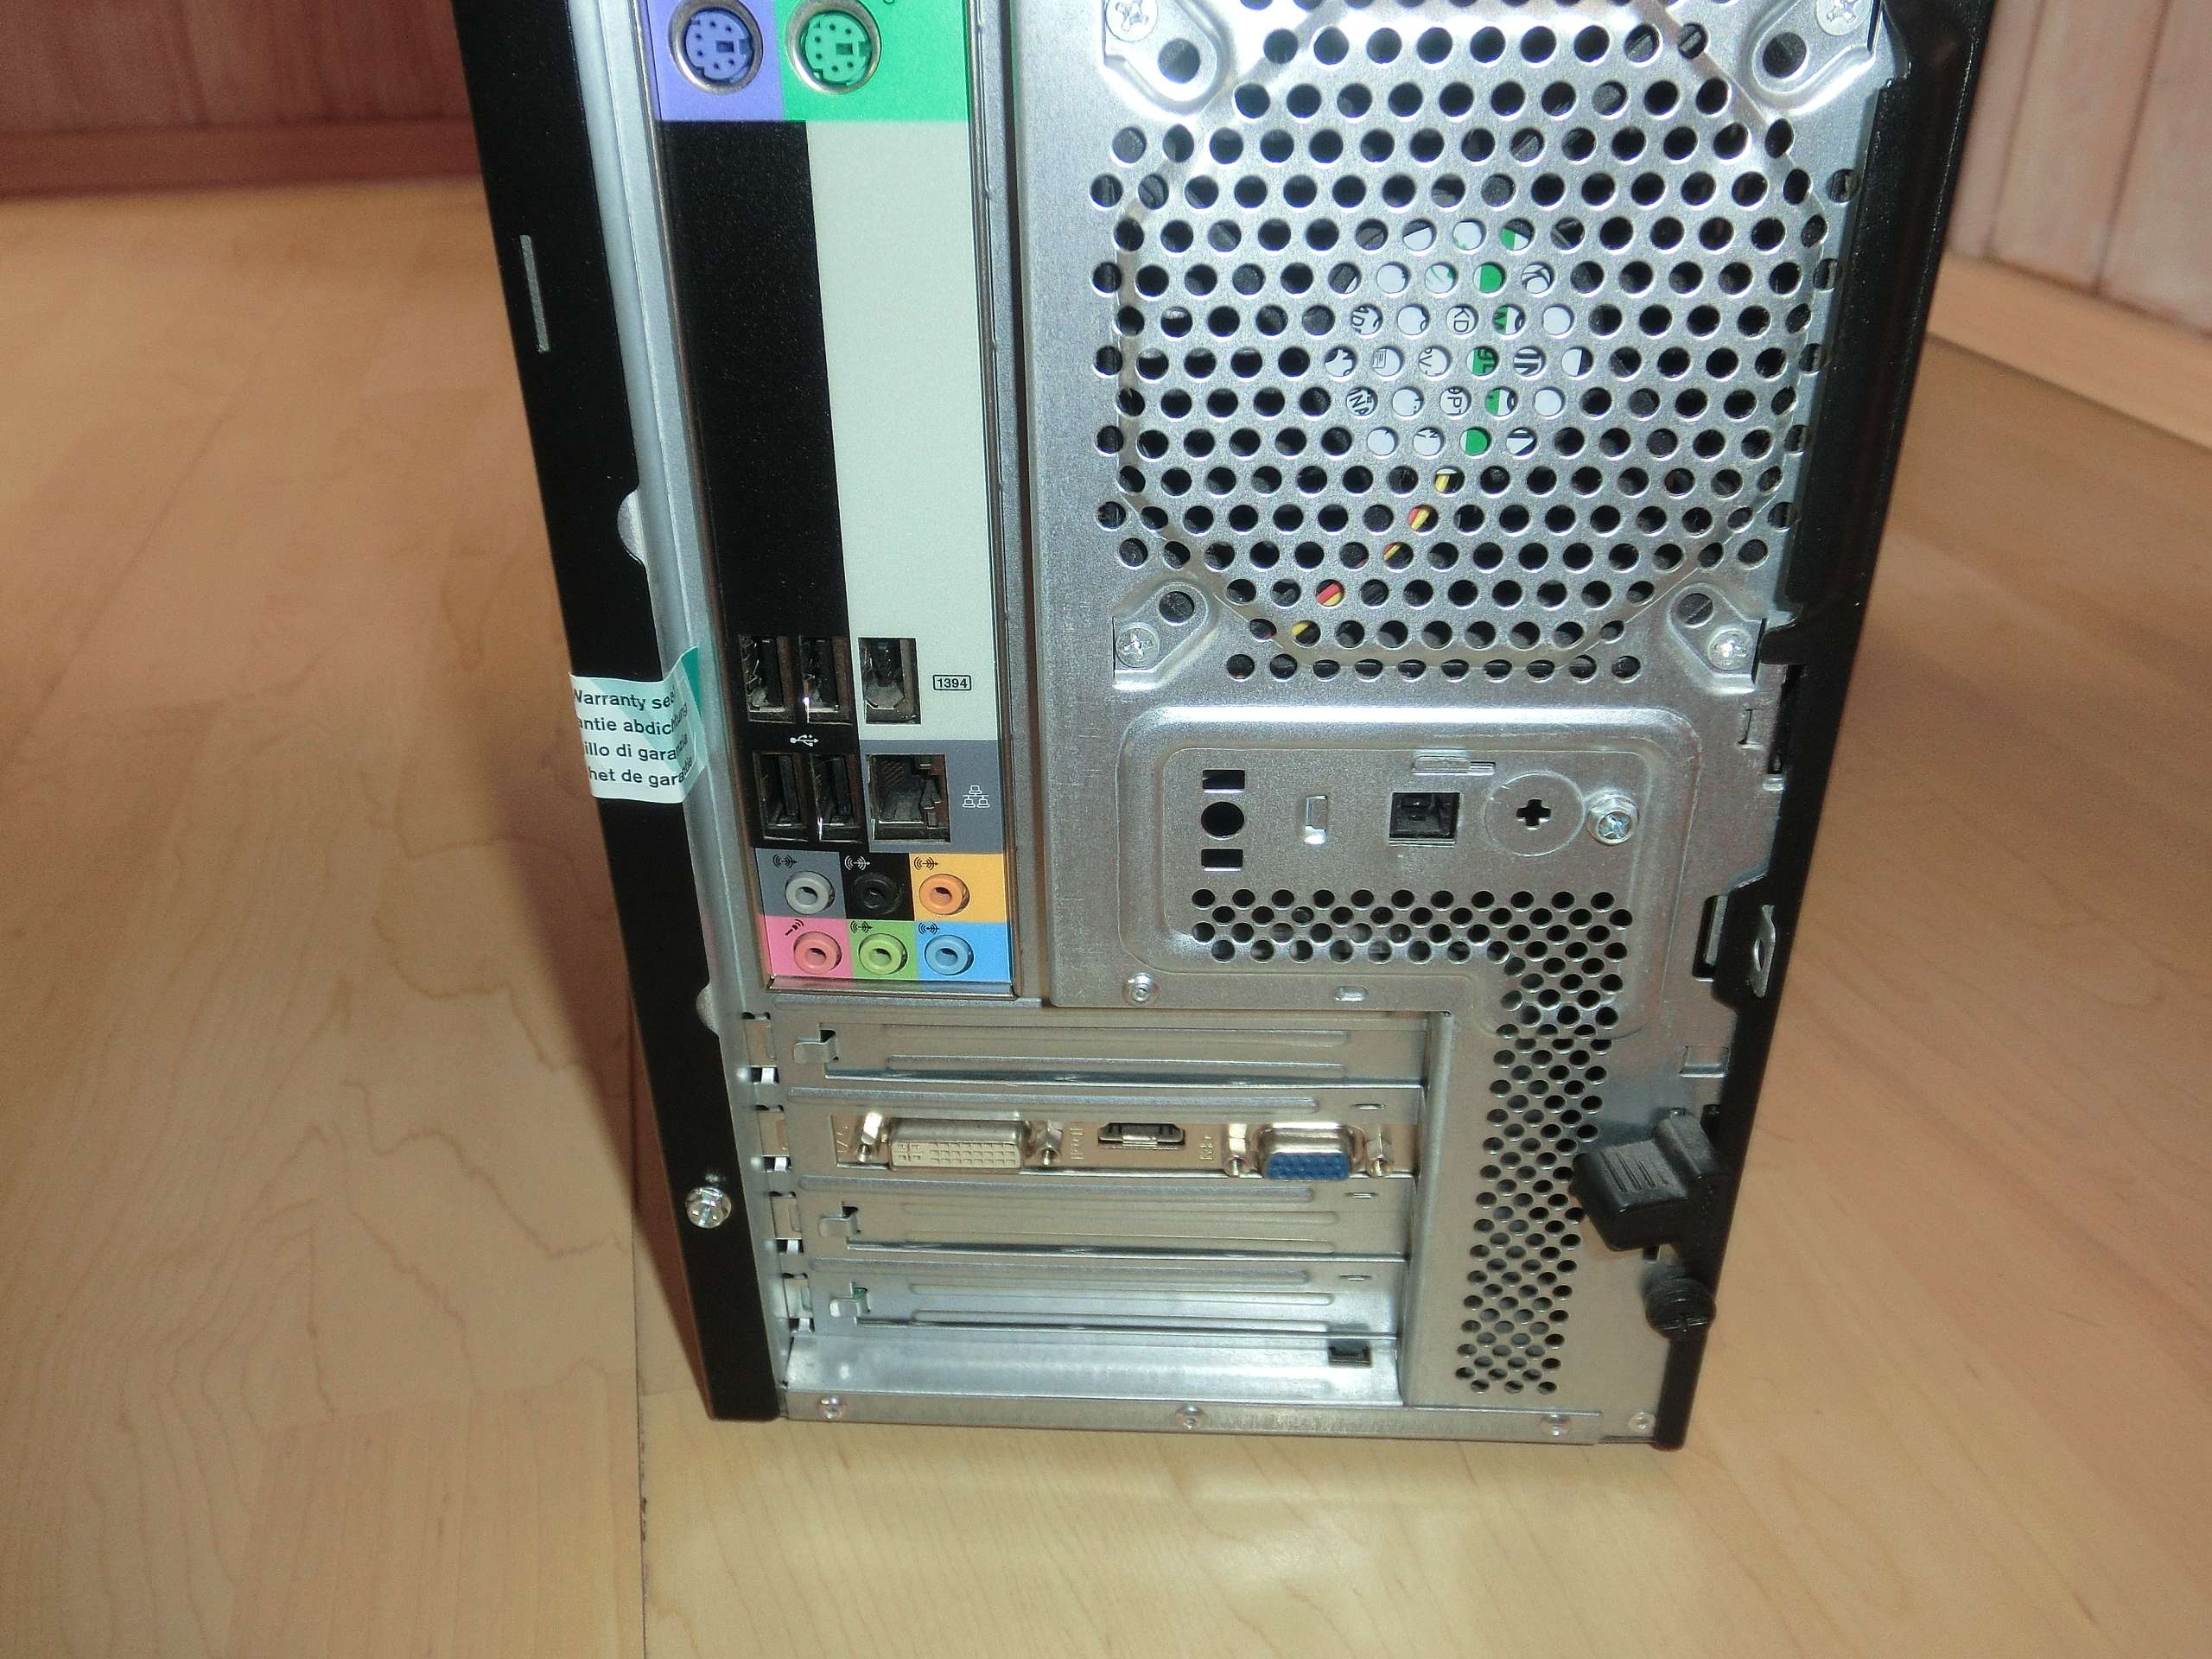 Acer Aspire M5711 Desktop PC, 1000GB HDD, 8GB RAM, Core 2 Quad, 2J